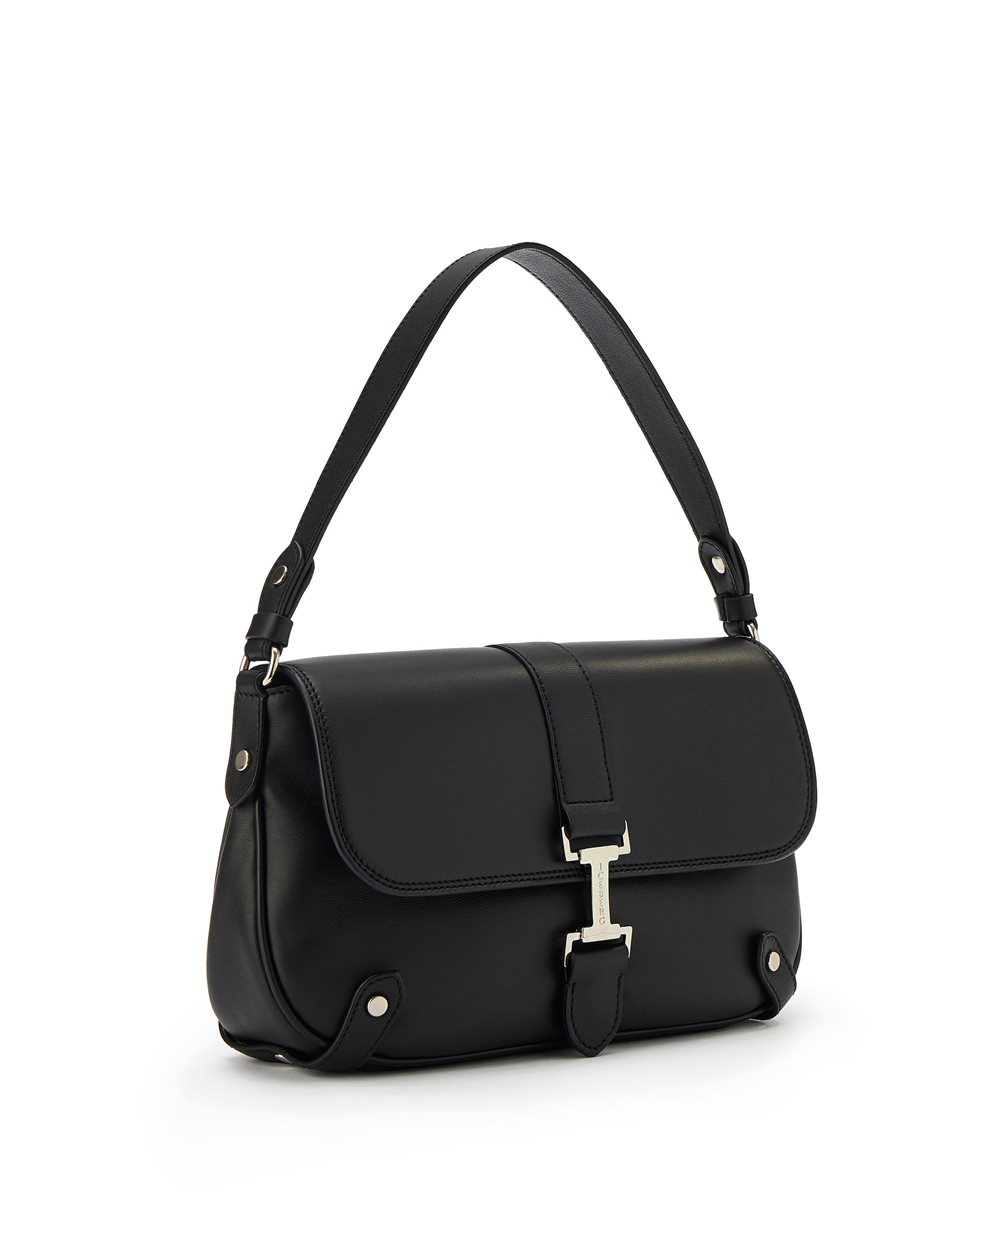 Radley London Medium Compact Crossbody Bag, Black, Leather